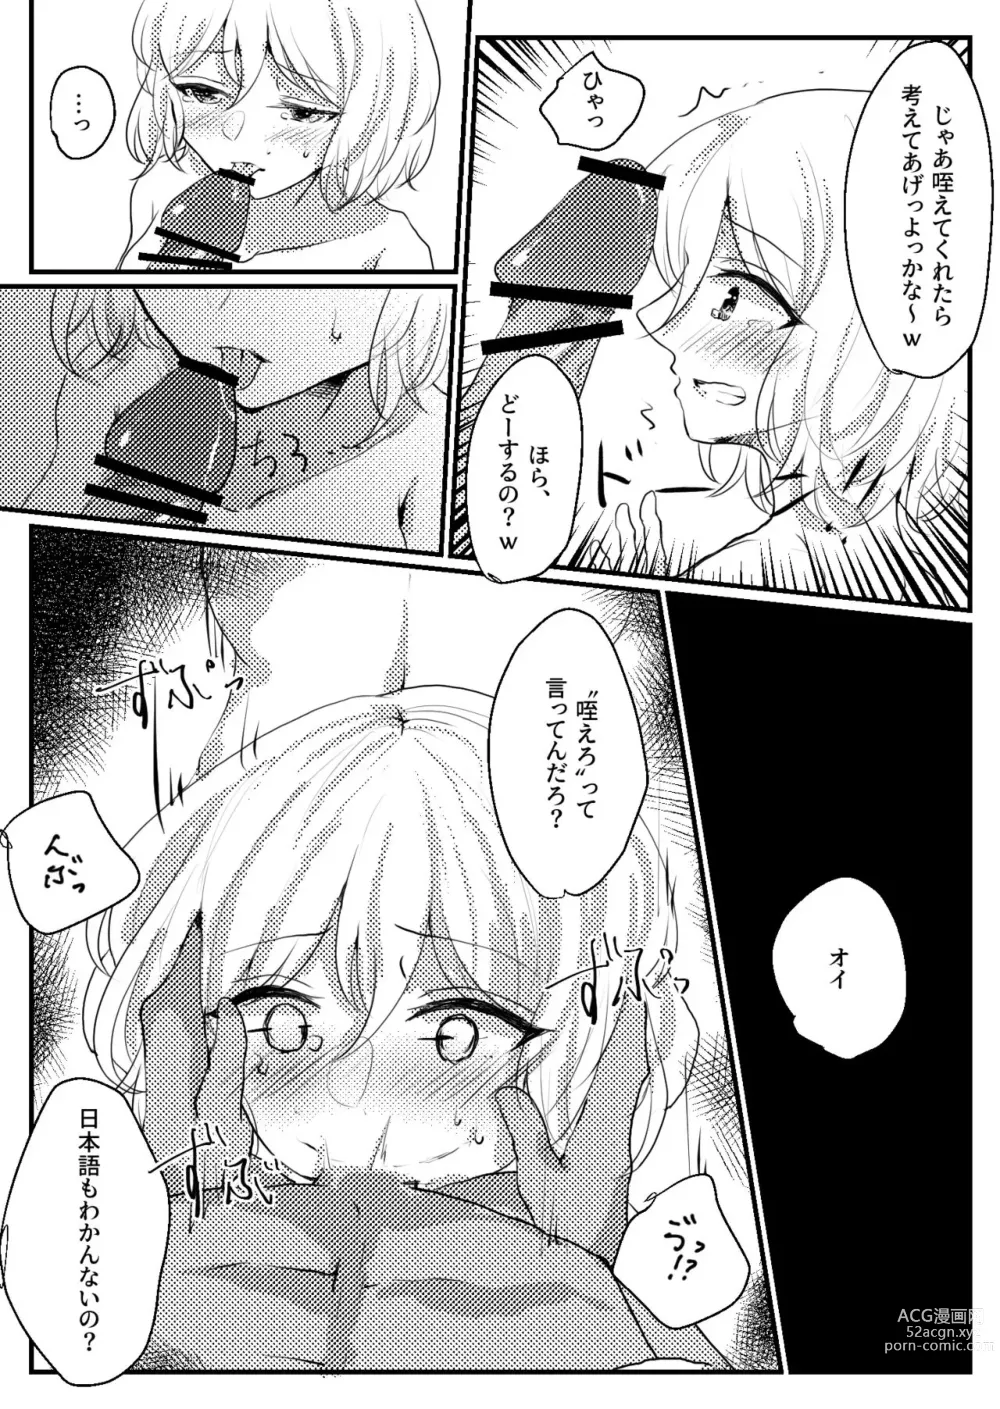 Page 6 of doujinshi Mashiro-chan MobRa